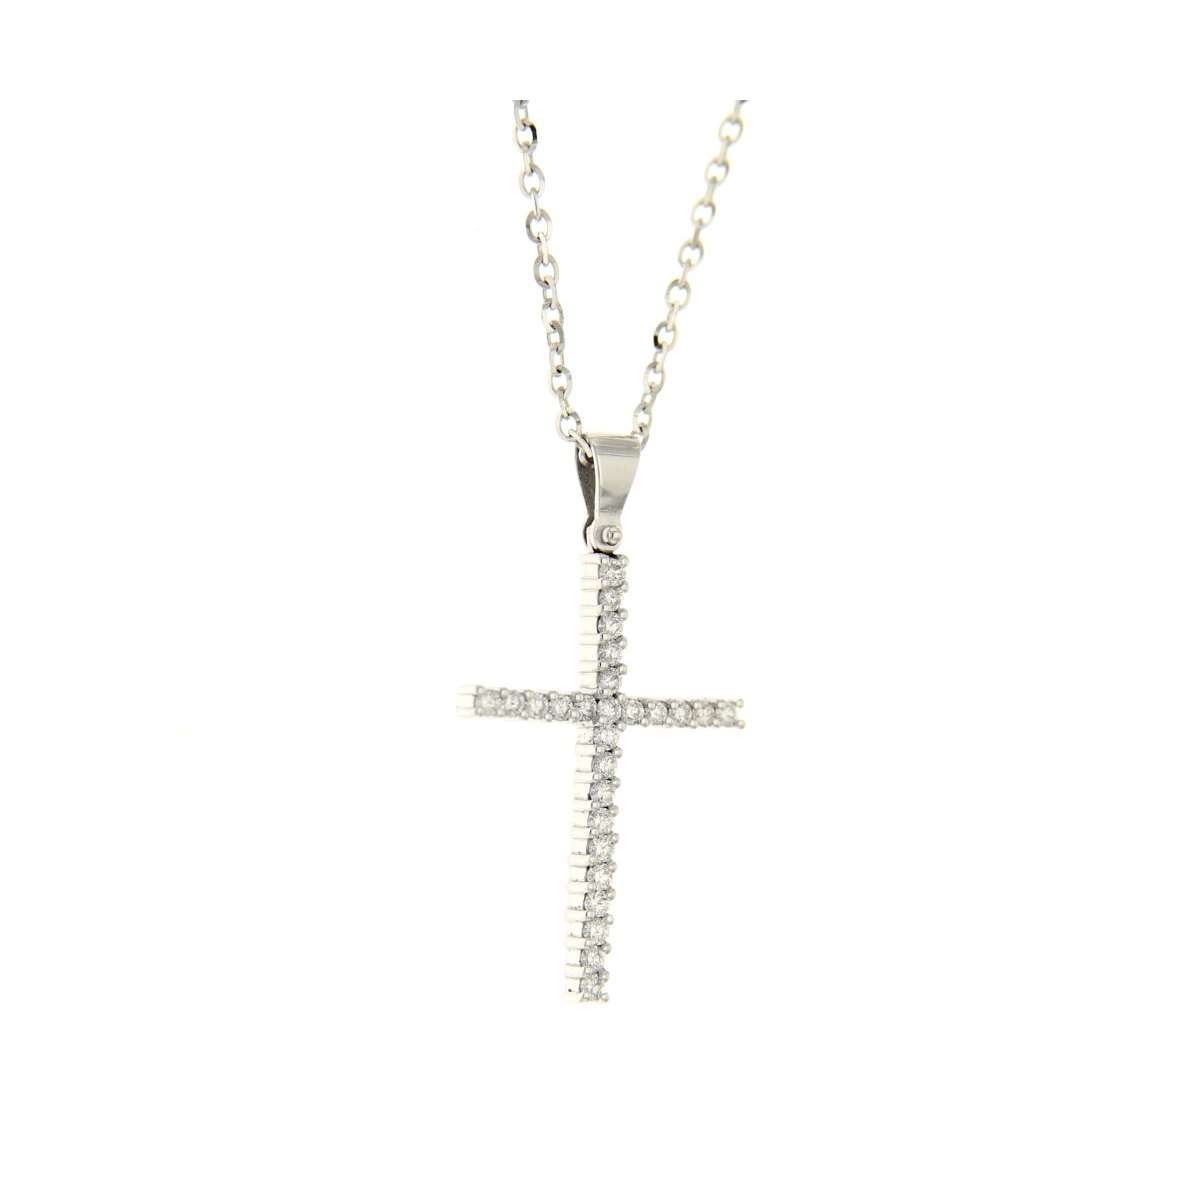 Cross necklace 0.31 carats diamonds G-VS1